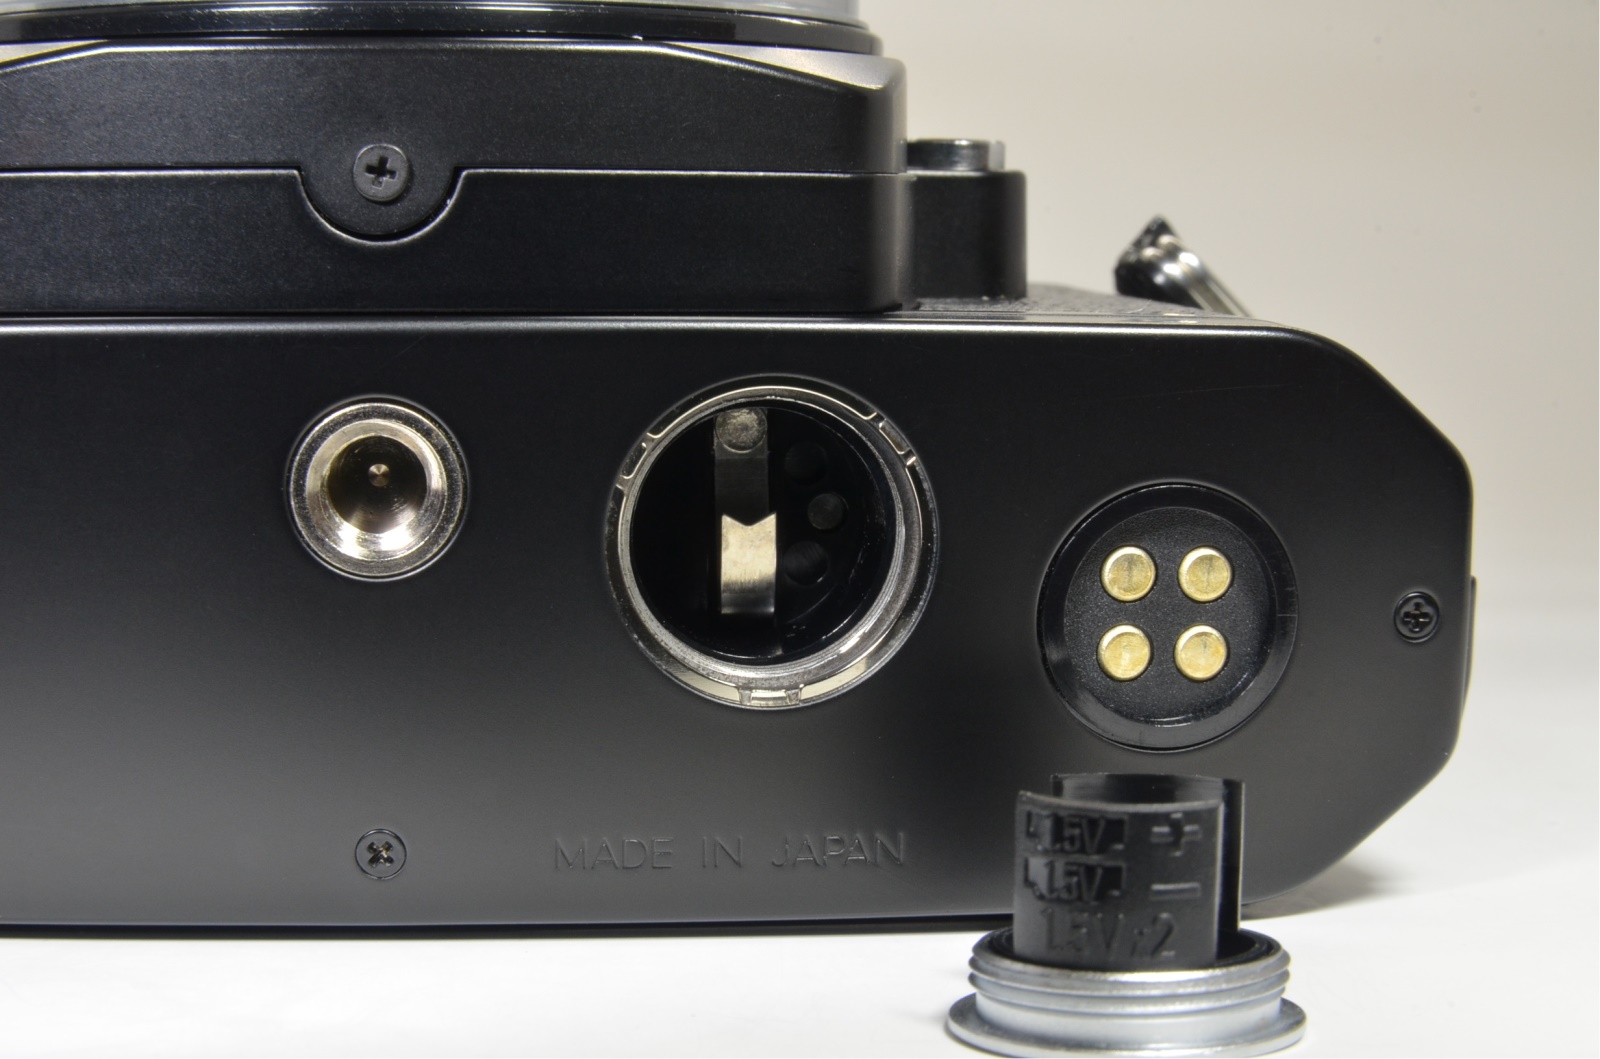 nikon fm3a 35mm film camera black near mint shooting tested